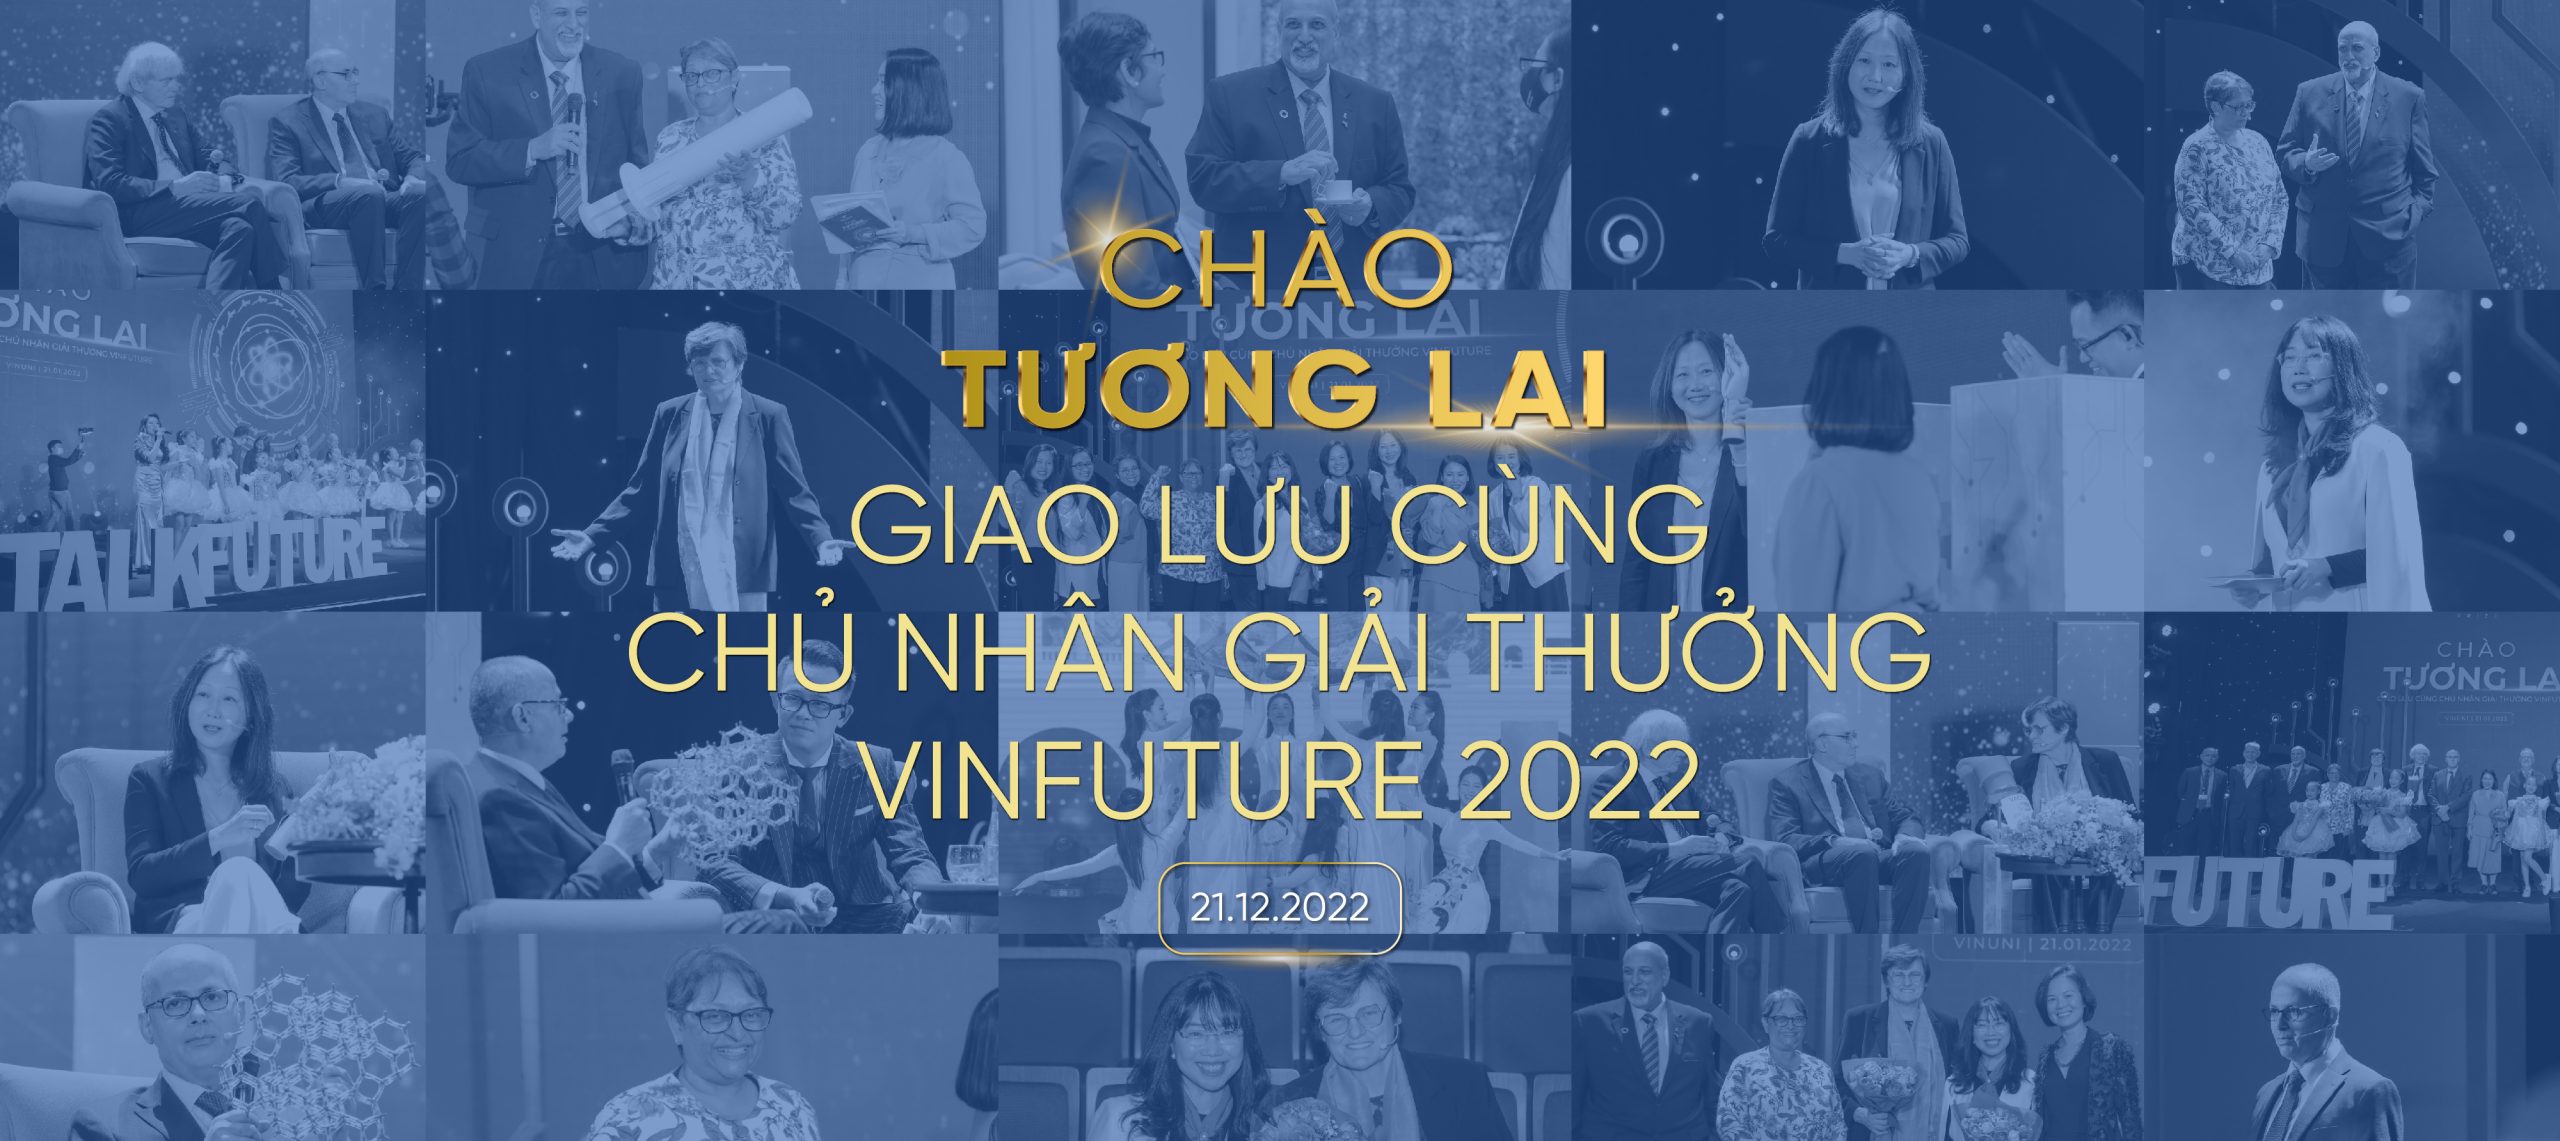 TALK-FUTURE-CHAO-TUONG-LAI-copy_FB-cover-VIE-scaled